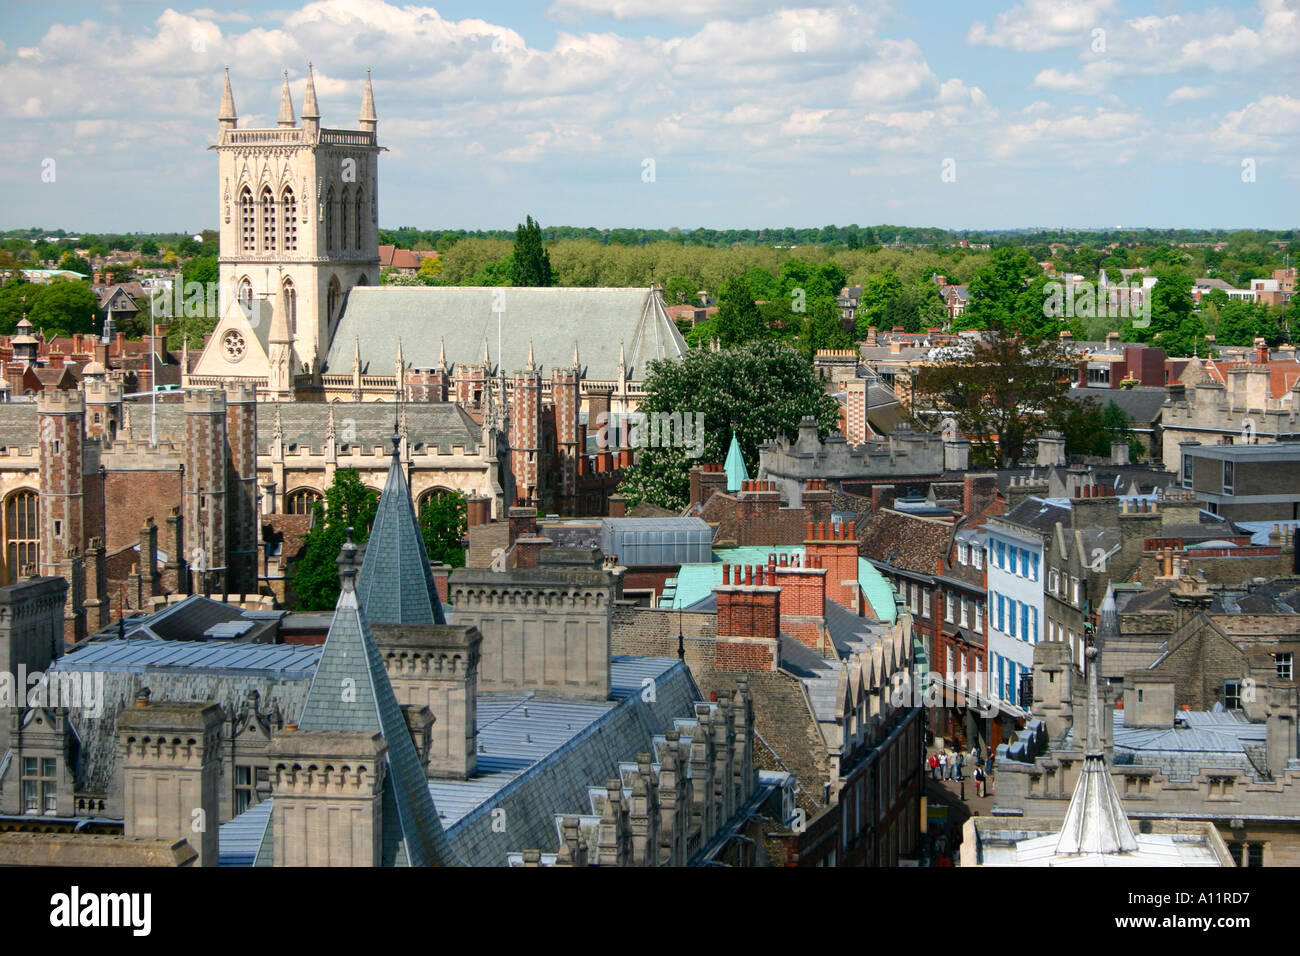 University city of Cambridge Rooftops, England, UK. Stock Photo